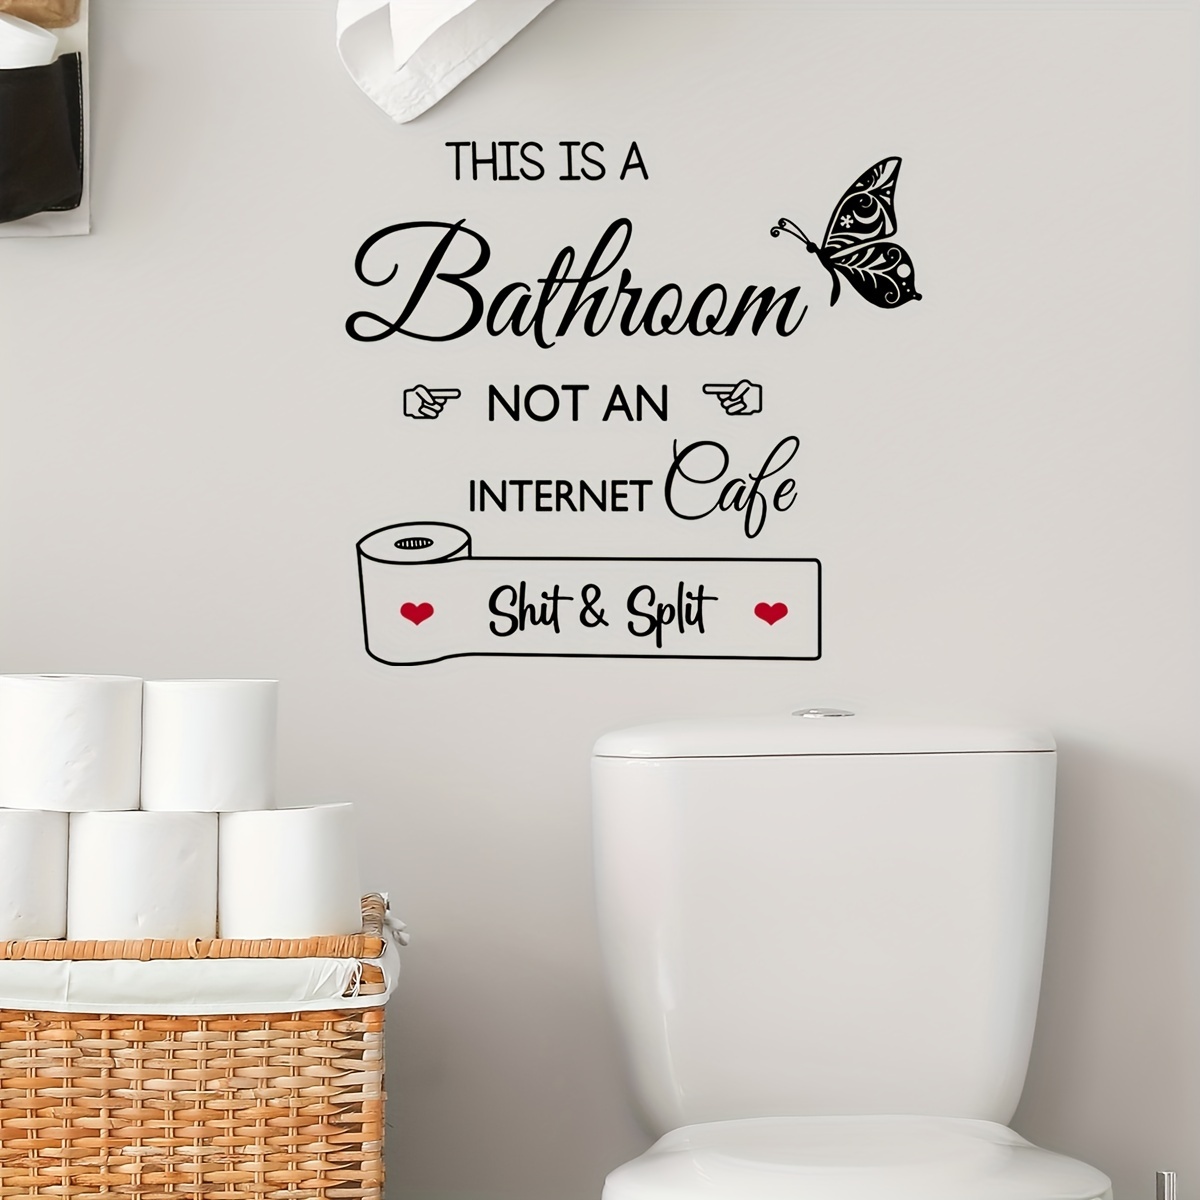  Bathroom Toilet seat Cover Sticker Decal - Sht Happens - Funny  Fun Home Decor : Tools & Home Improvement